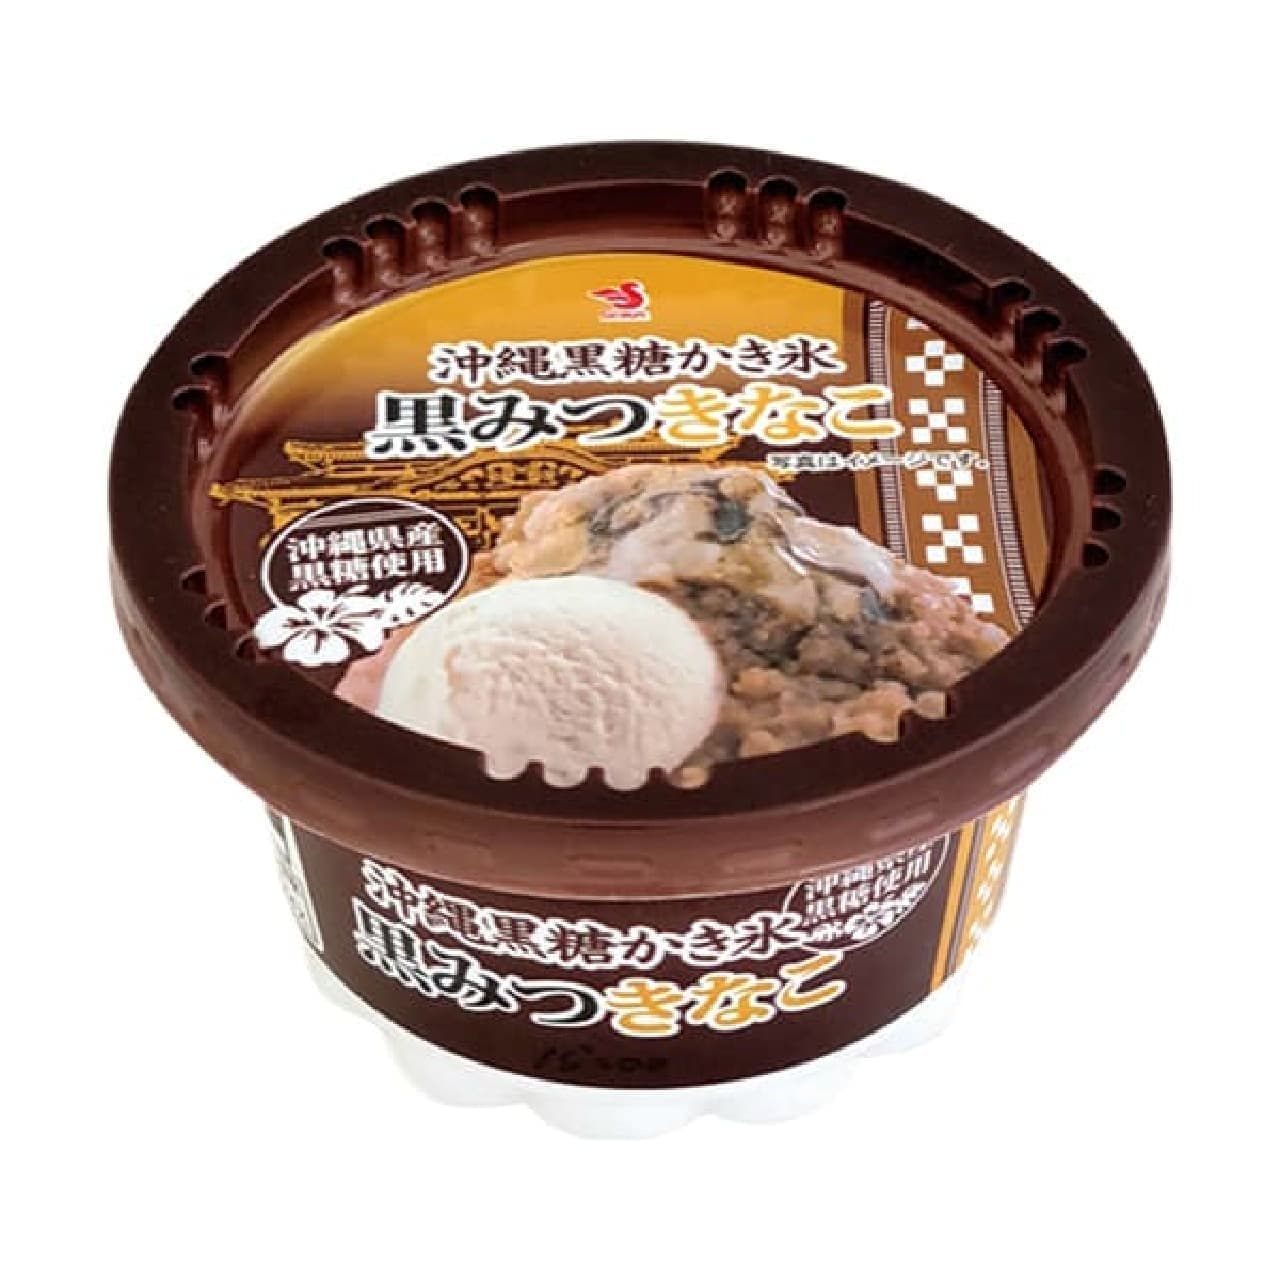 FamilyMart "Seika Okinawa brown sugar shaved ice with brown sugar and soybean flour